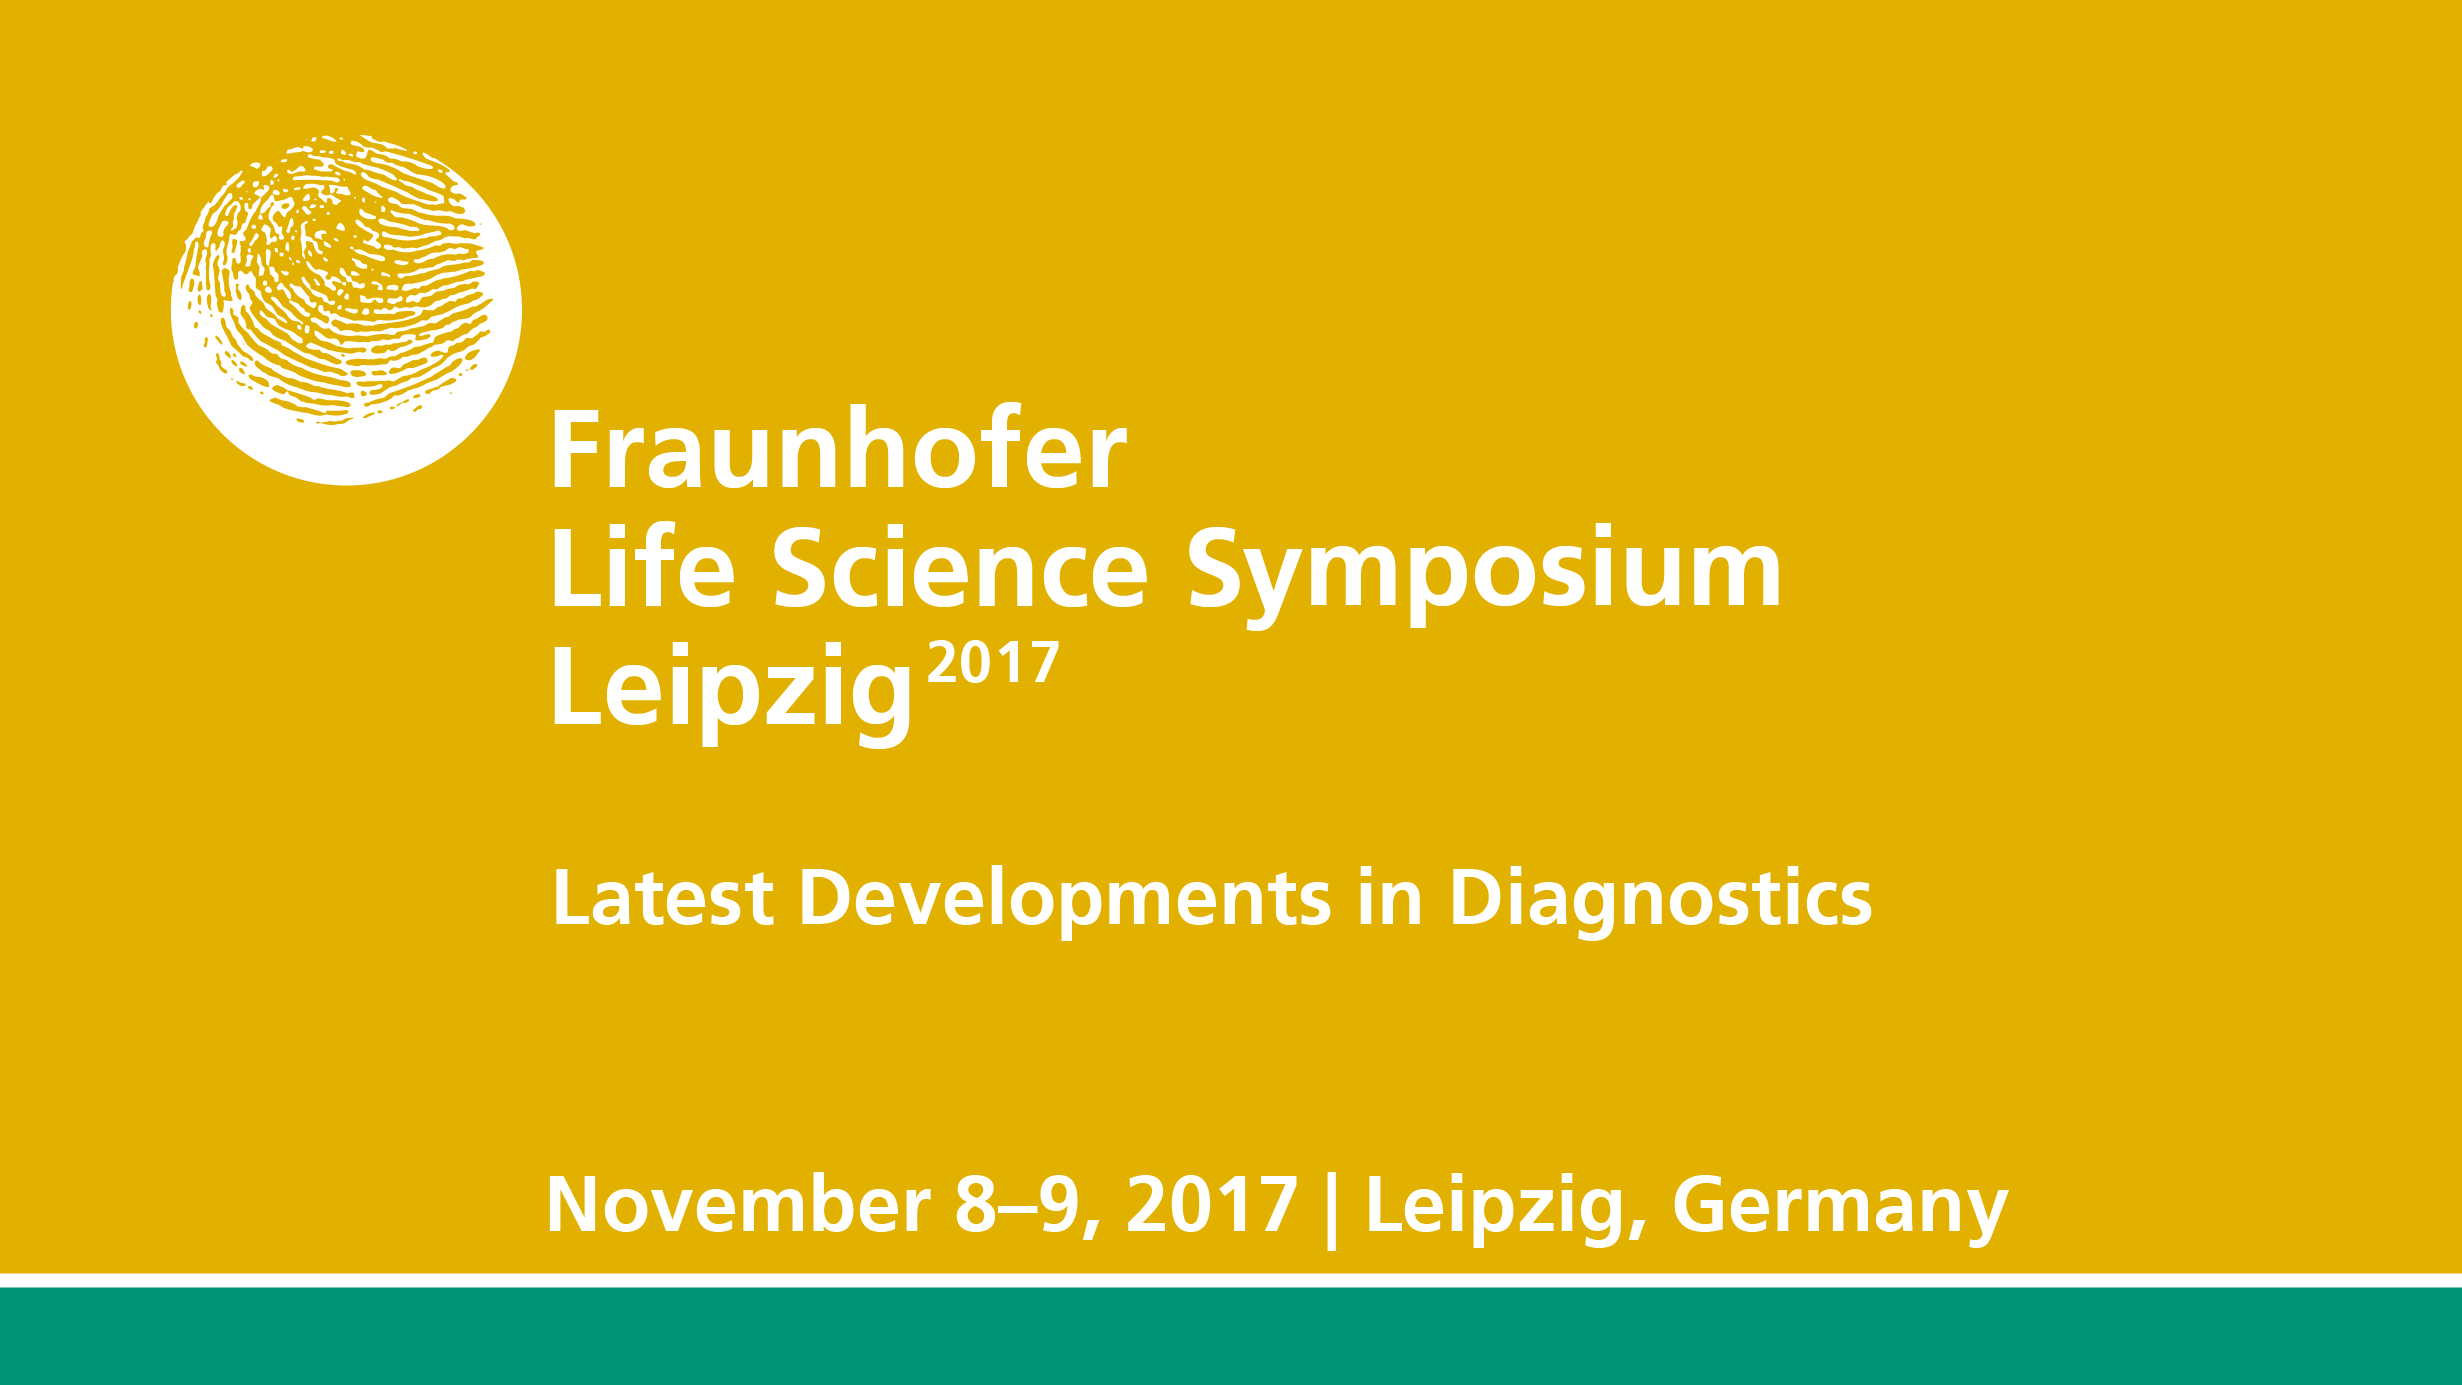 Fraunhofer Life Science Symposium